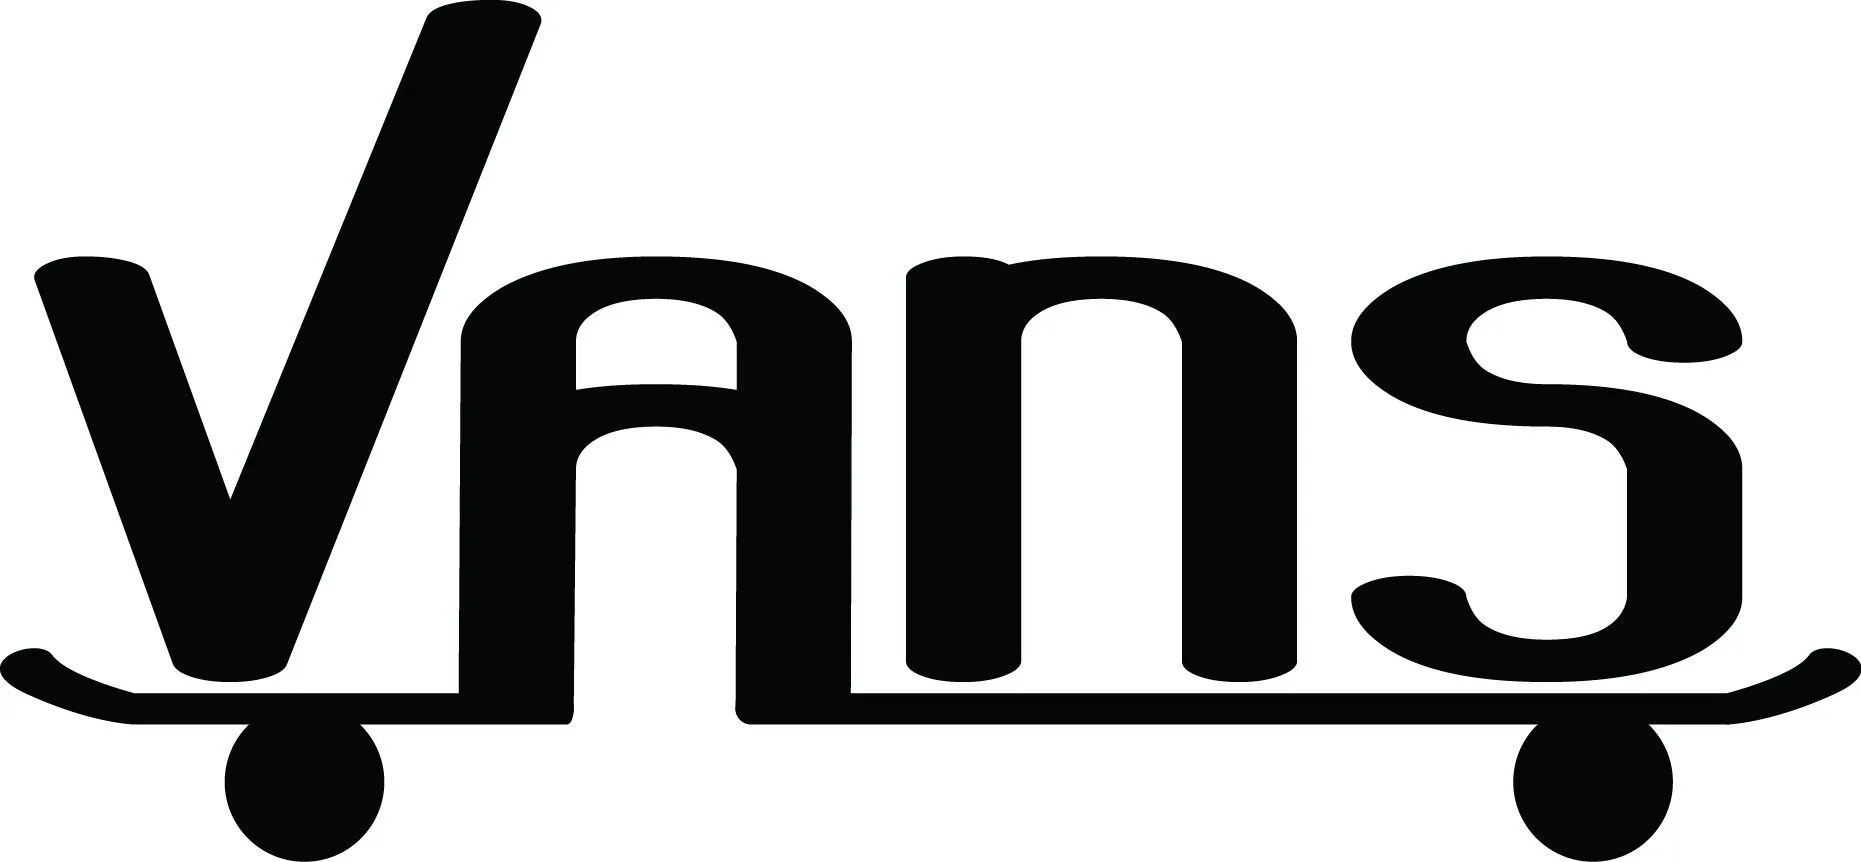 Logos For > Vans Shoes Logo